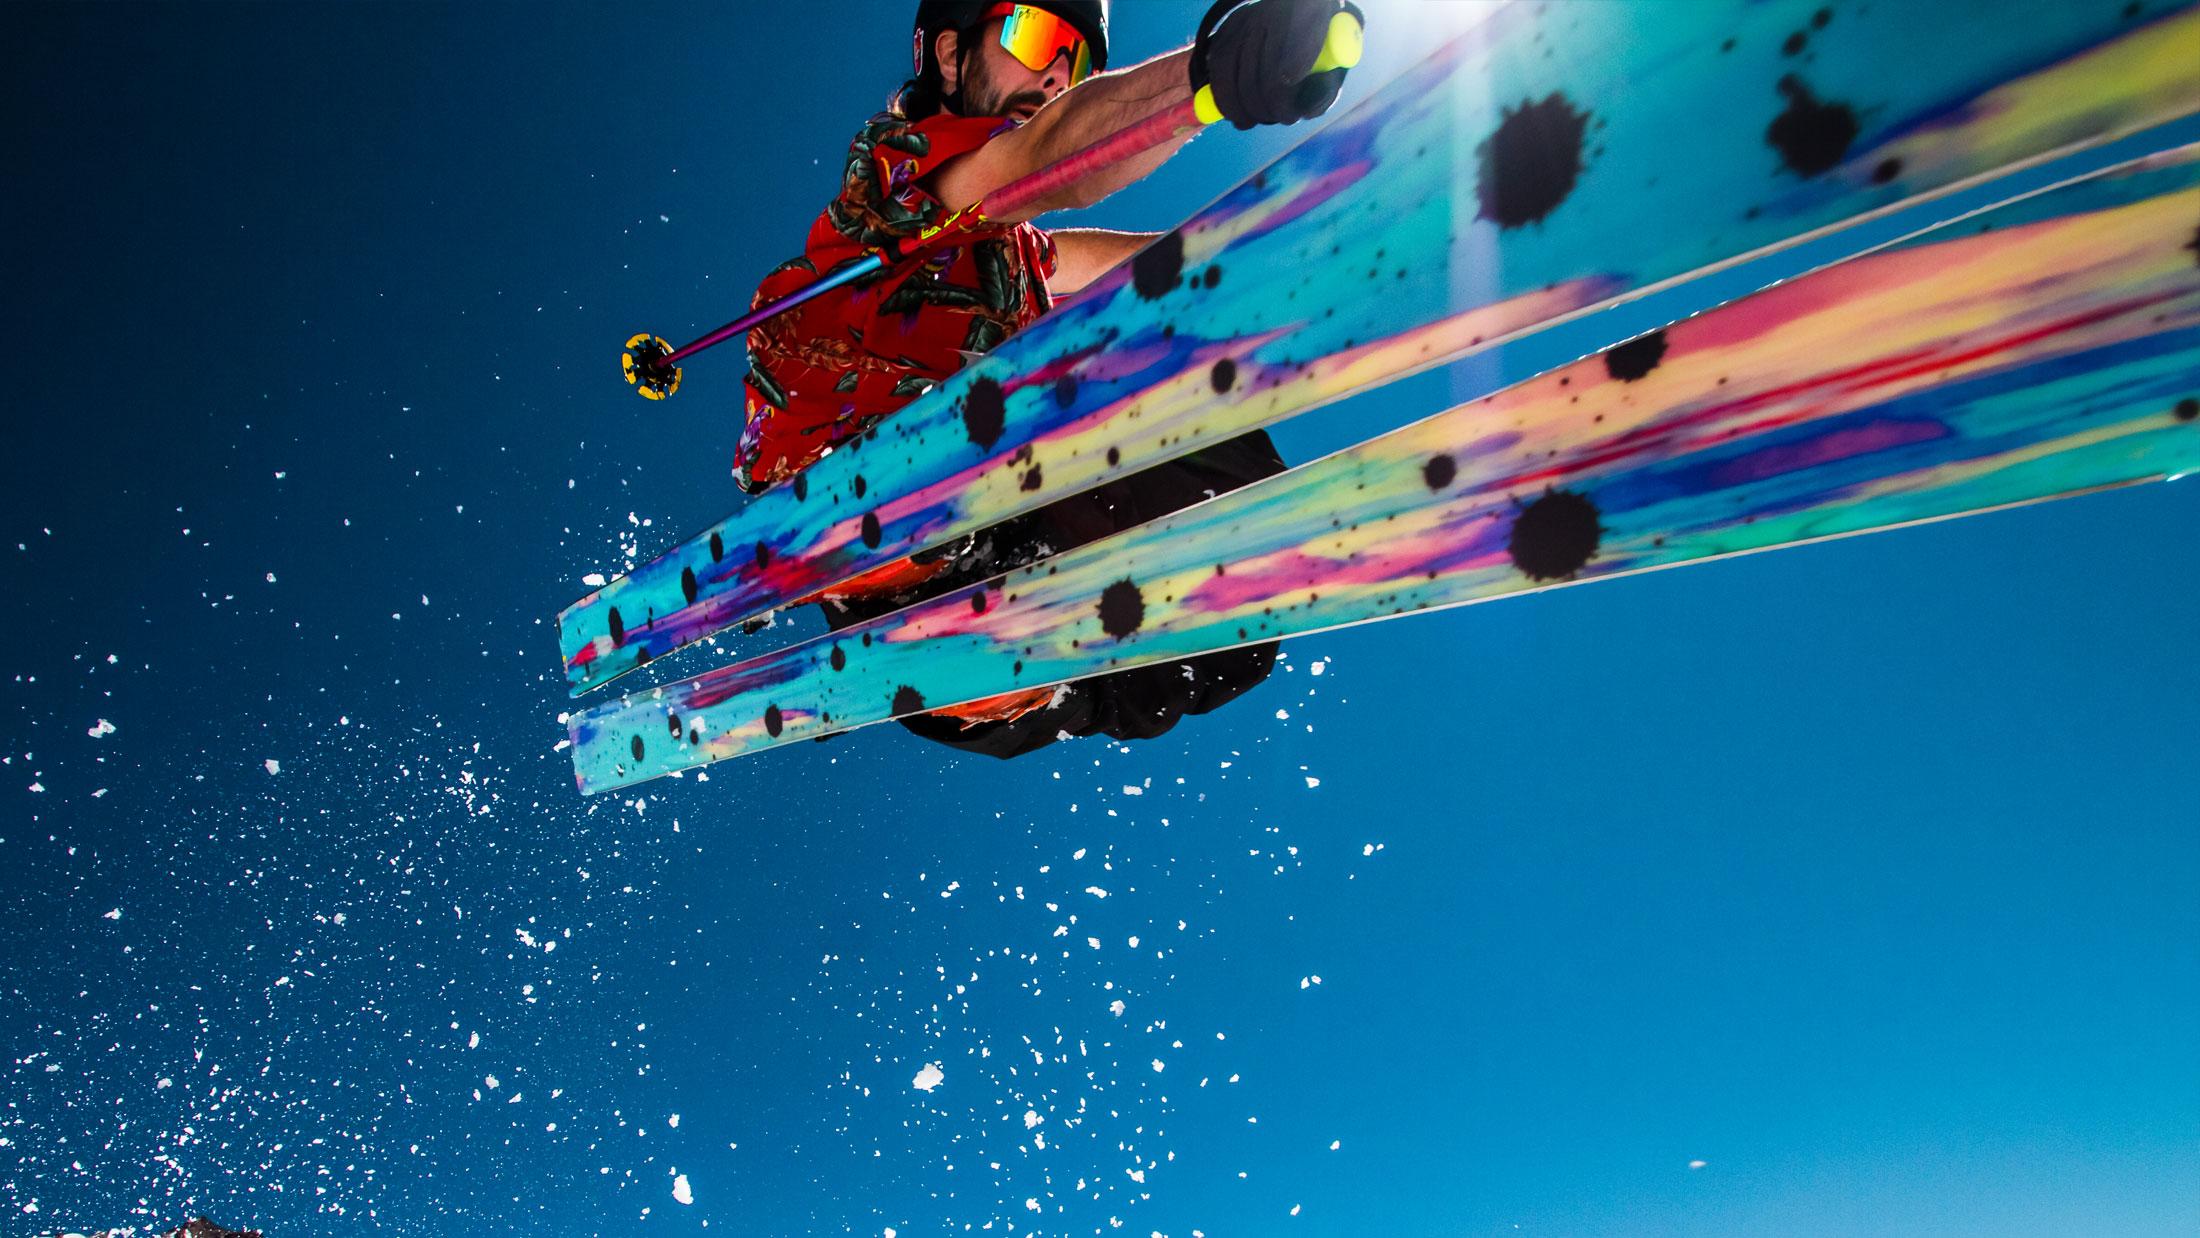 The Masterblaster "UPSTREAM" Alyse Dietel x J Collab Limited Edition Ski Shredding Image